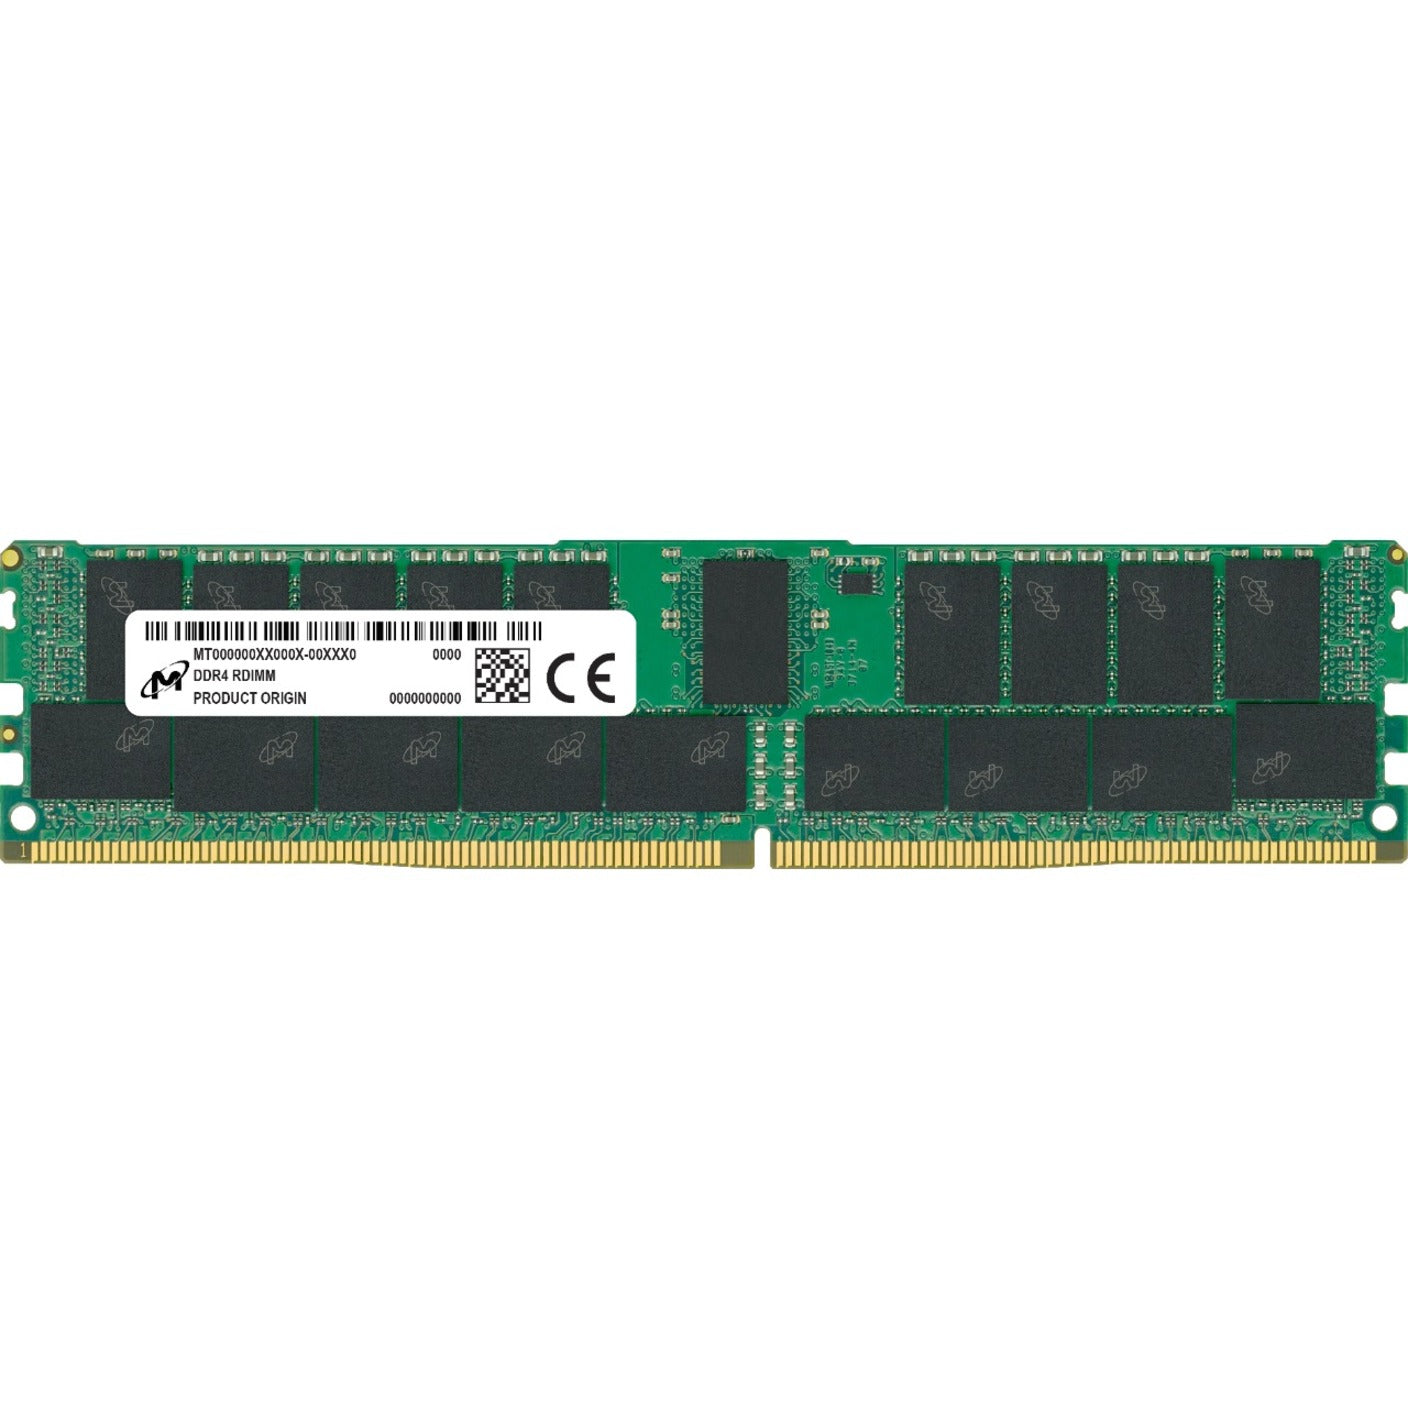 Micron MTA36ASF8G72PZ-2G9B1 64GB DDR4 SDRAM Memory Module, High Performance RAM for Enhanced Computing